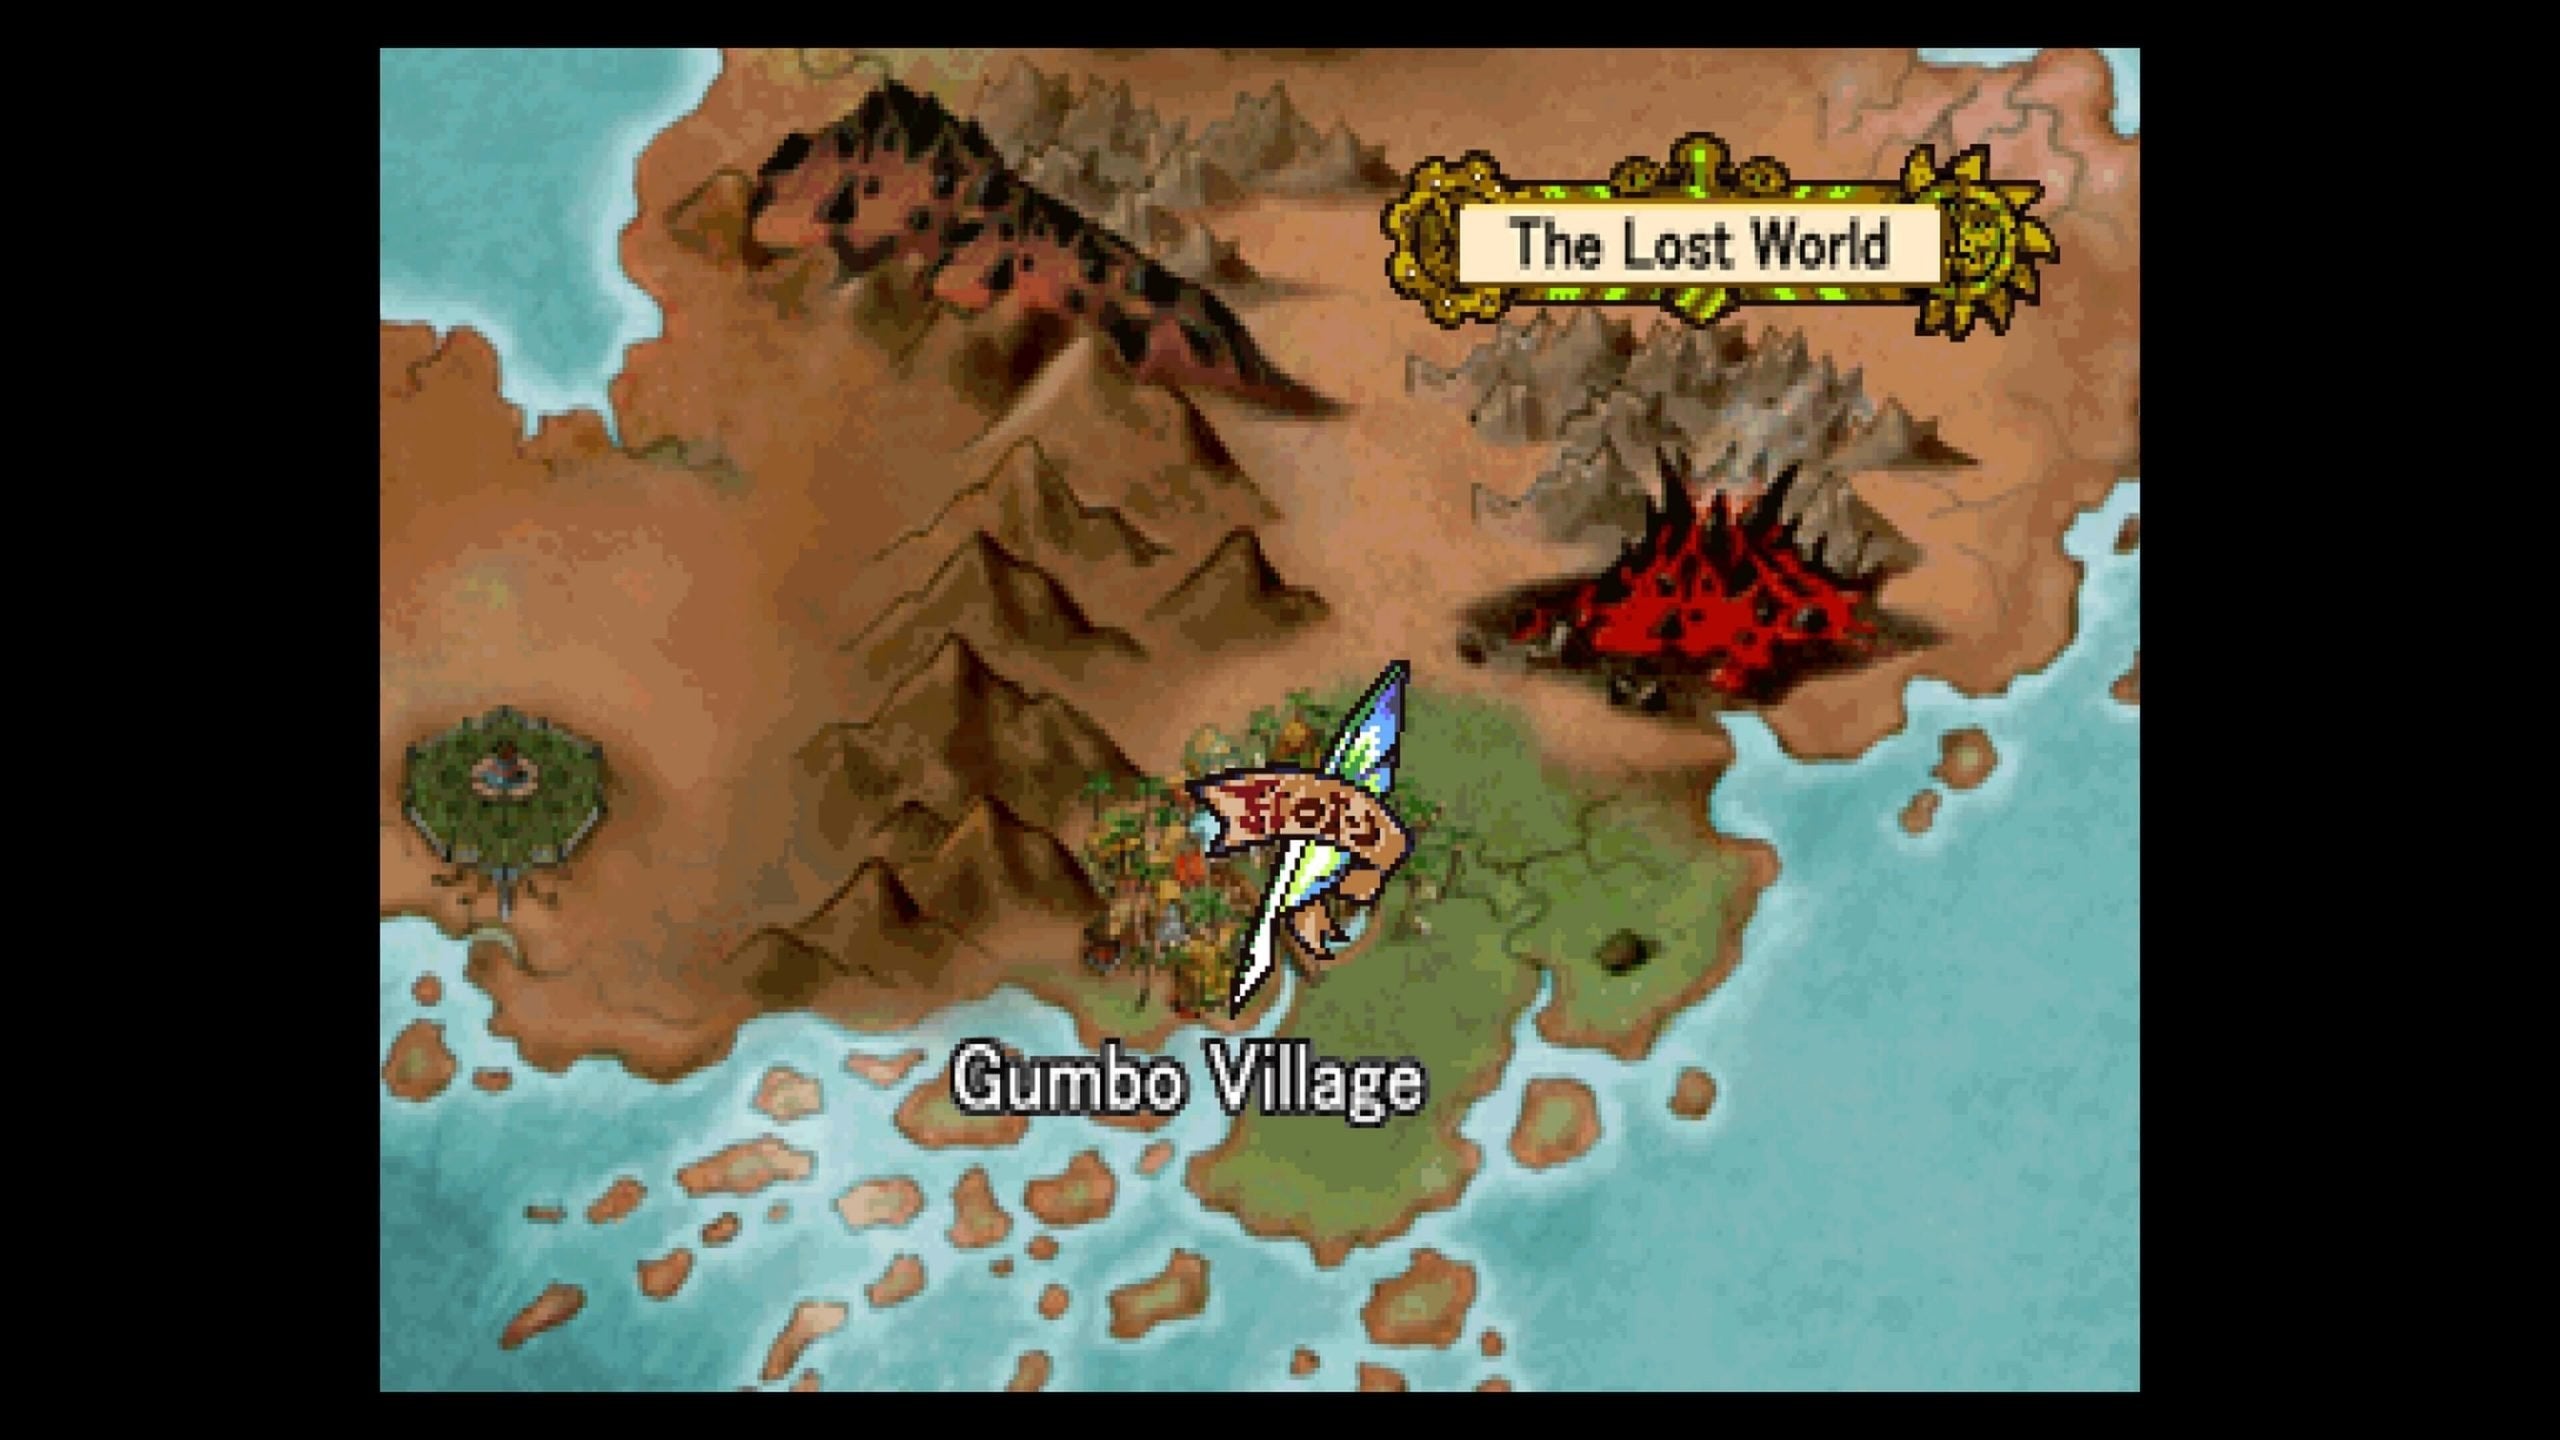 Gumbo Village in Grandia.